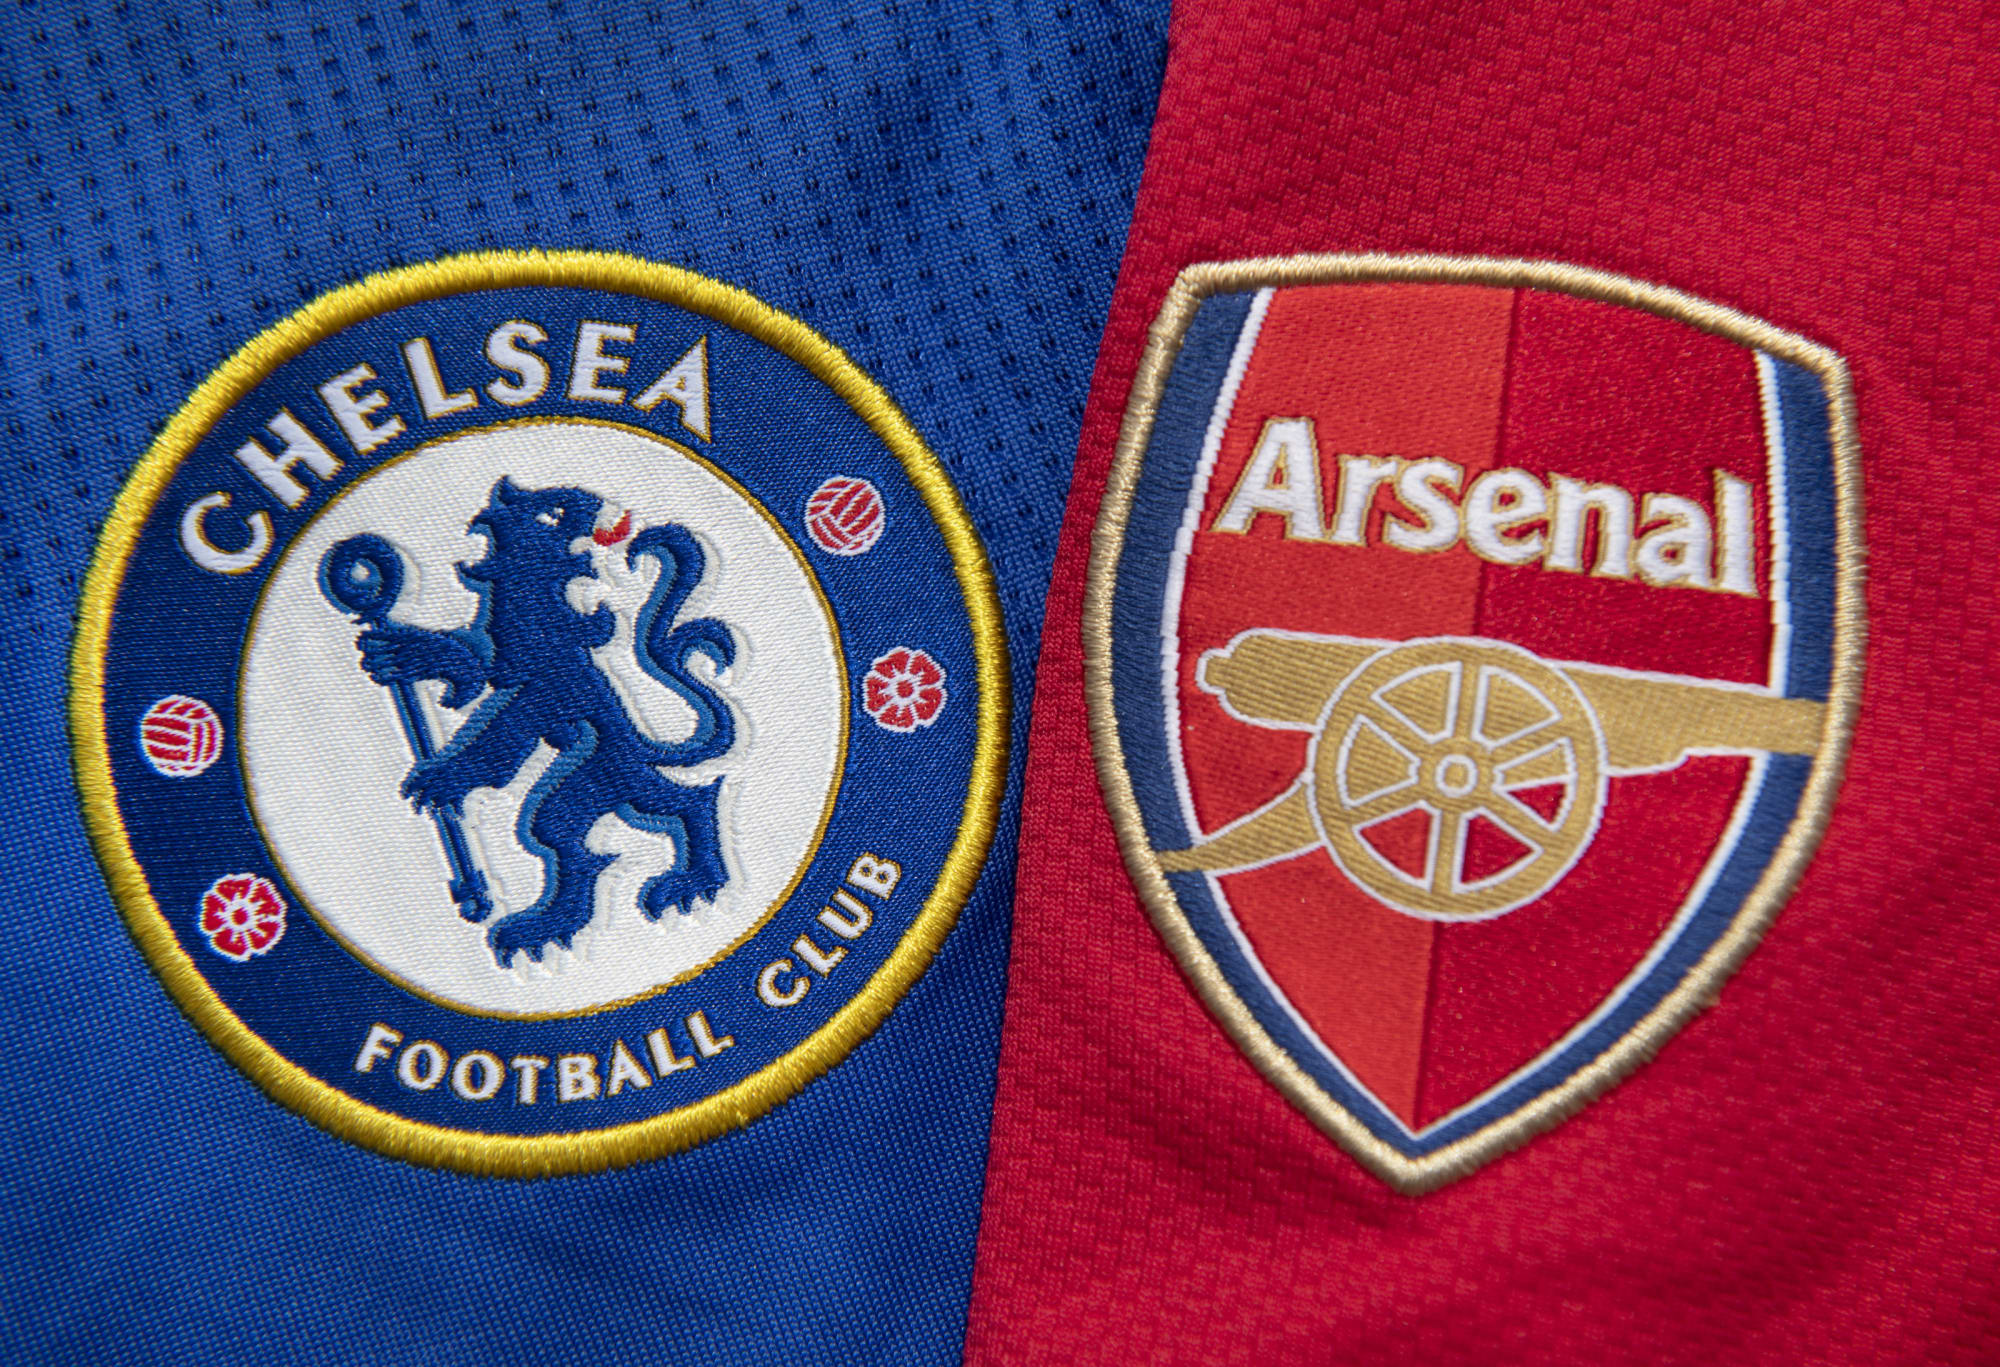 Chelsea vs Arsenal preview: Wednesday's Premier League clash - Page 2